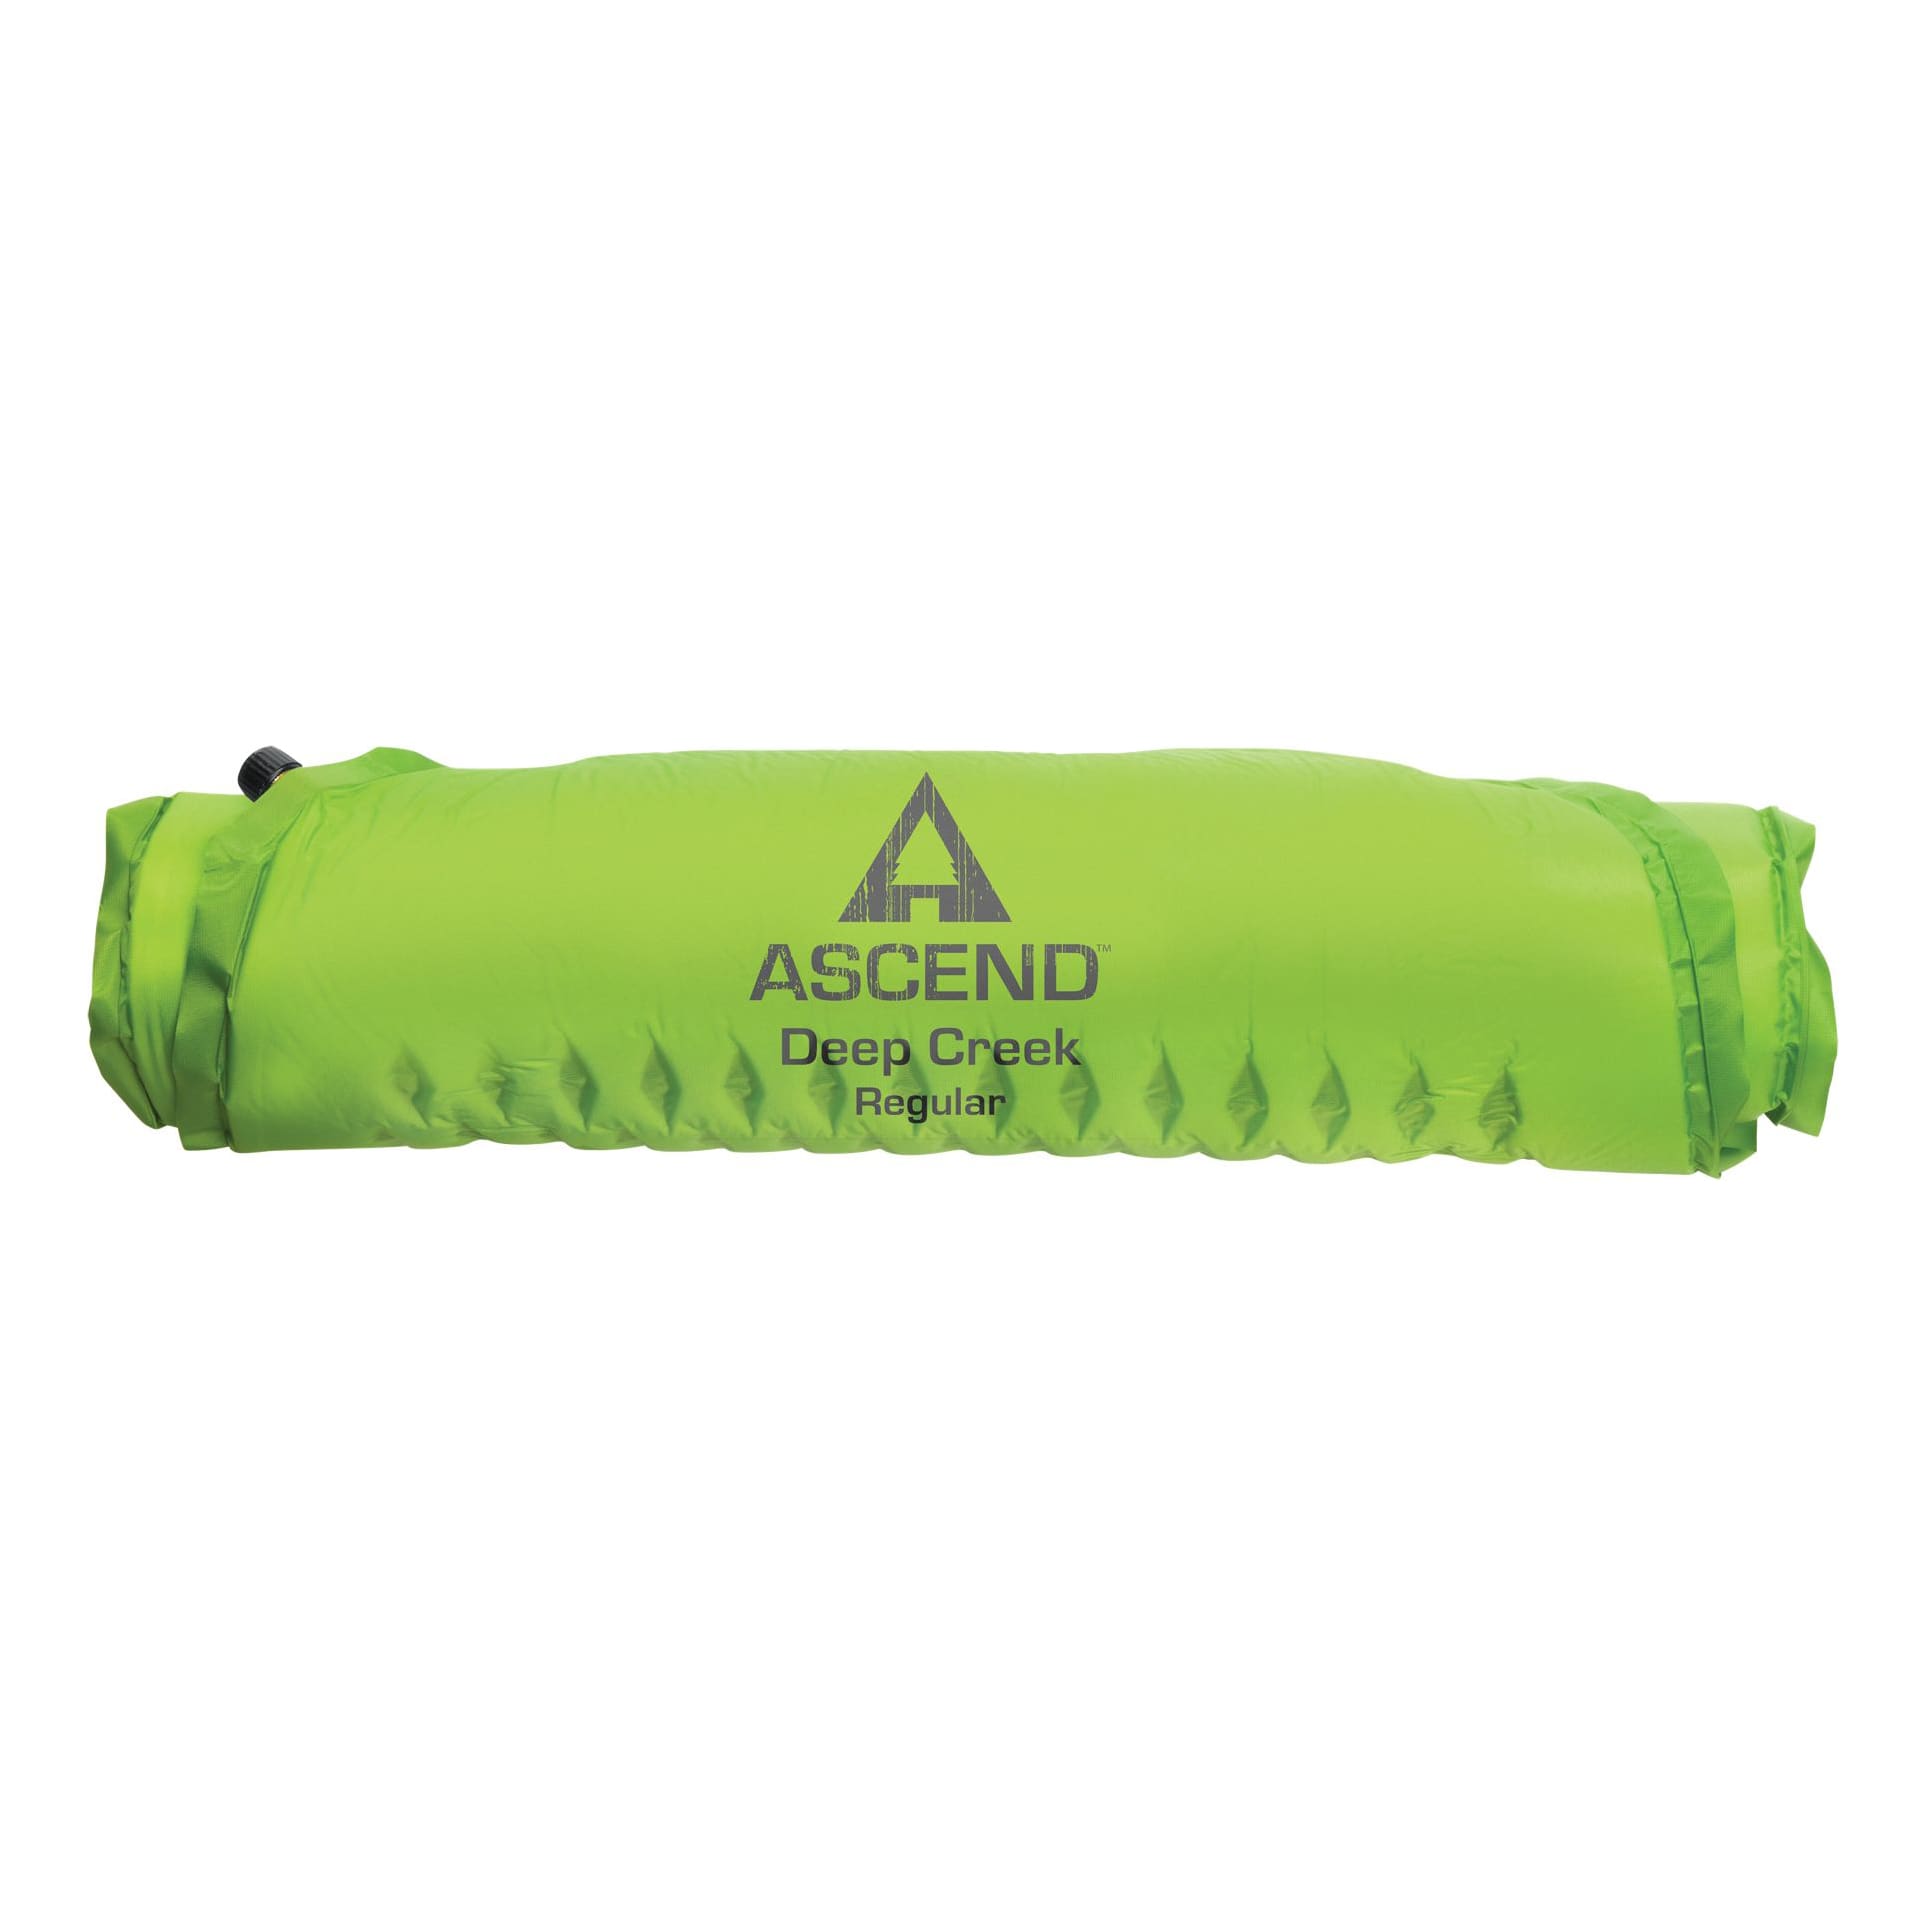 Ascend® Deep Creek Self-Inflating Air Mattress - Rolled Up View